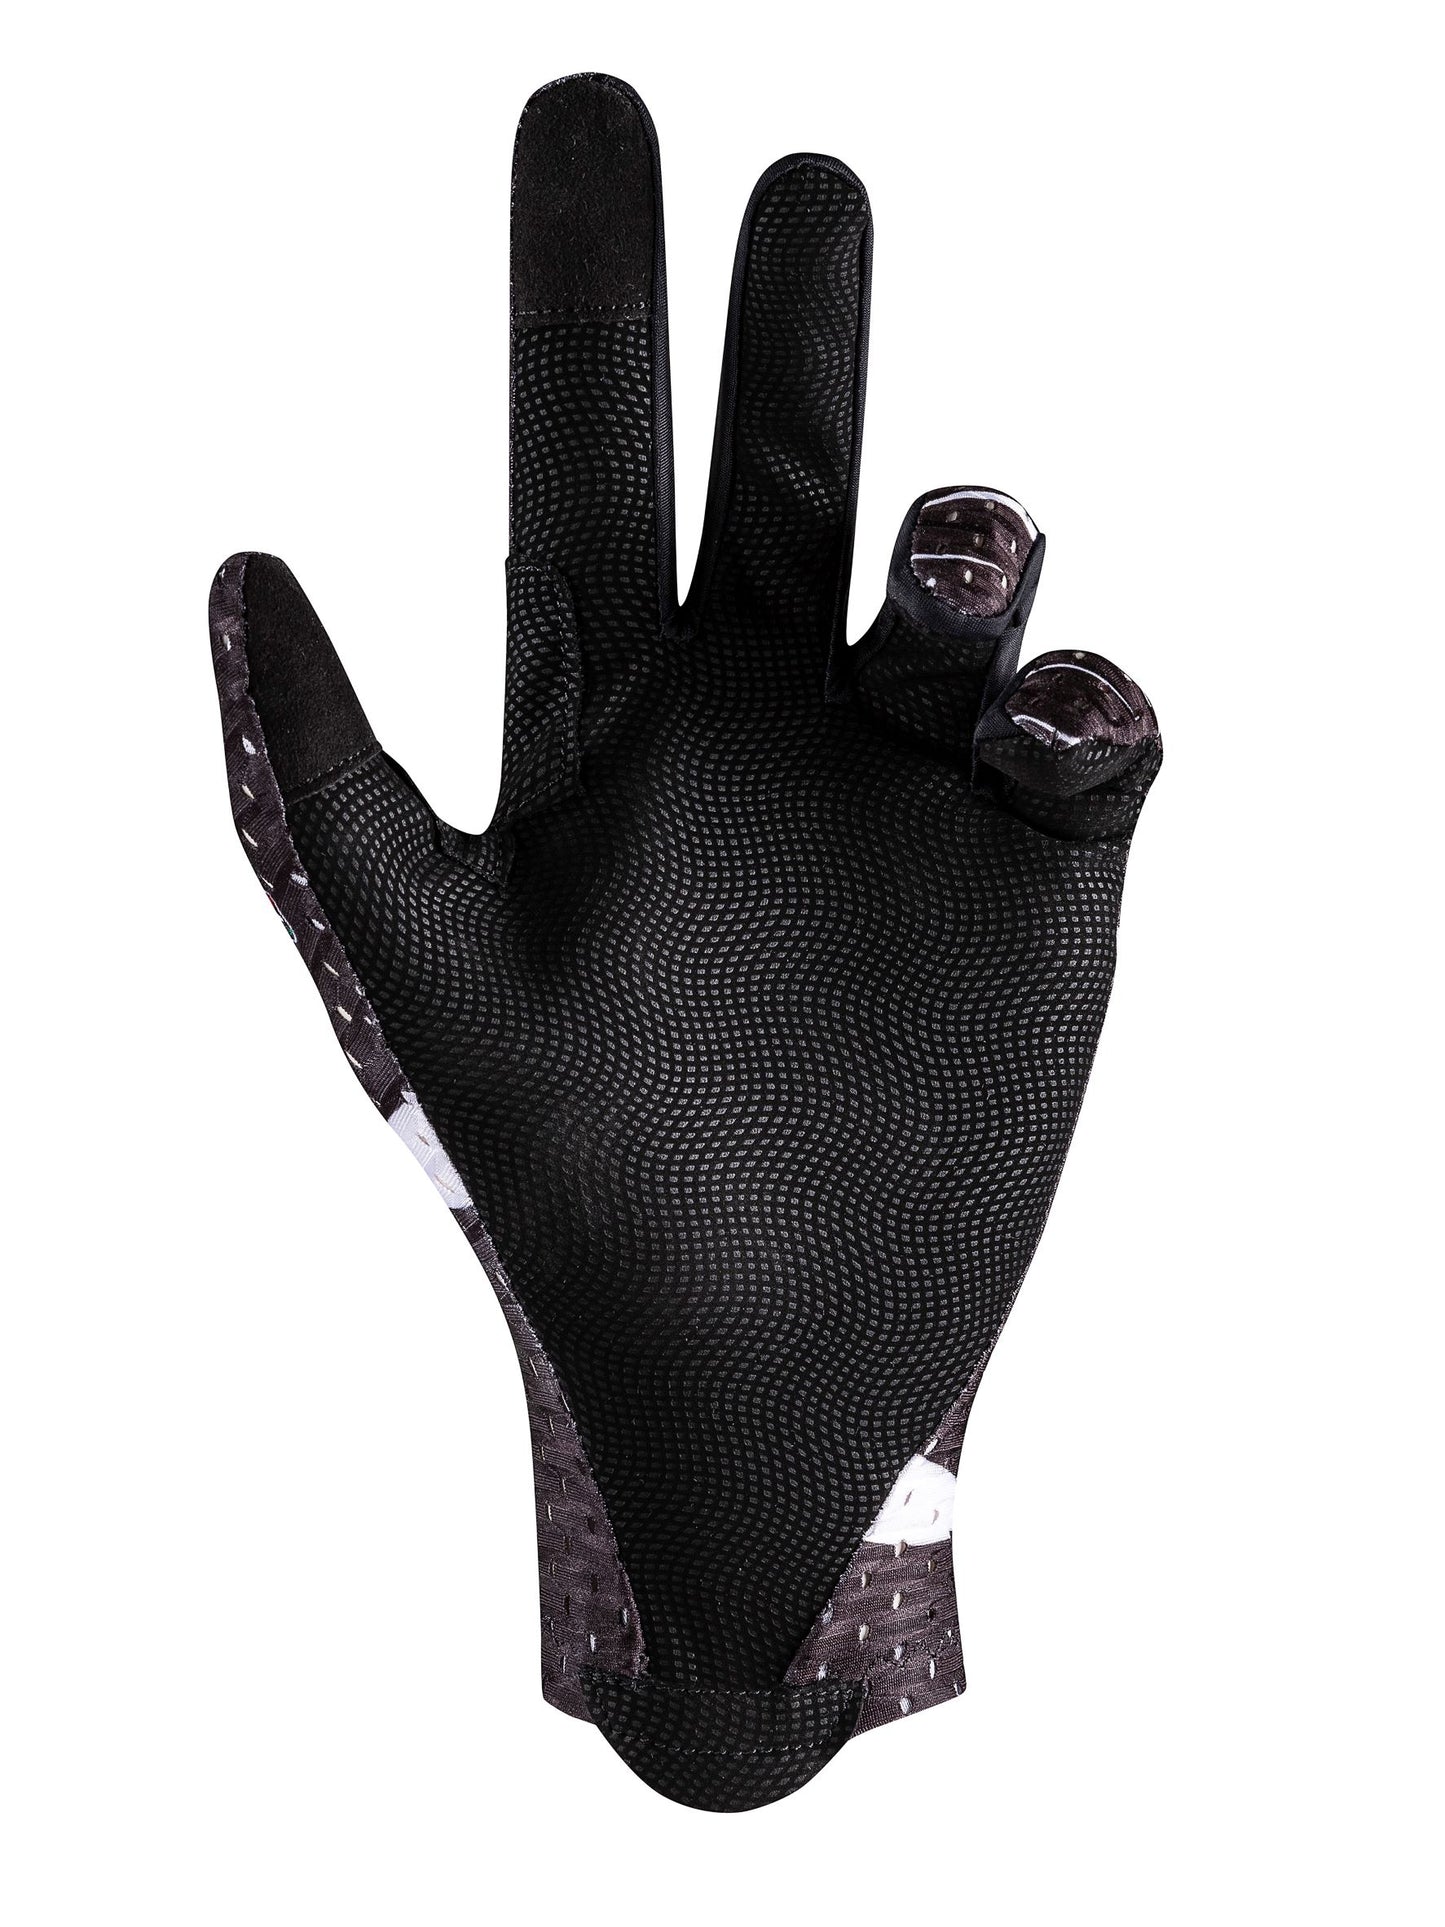 Sim Racing Handskar / Glove